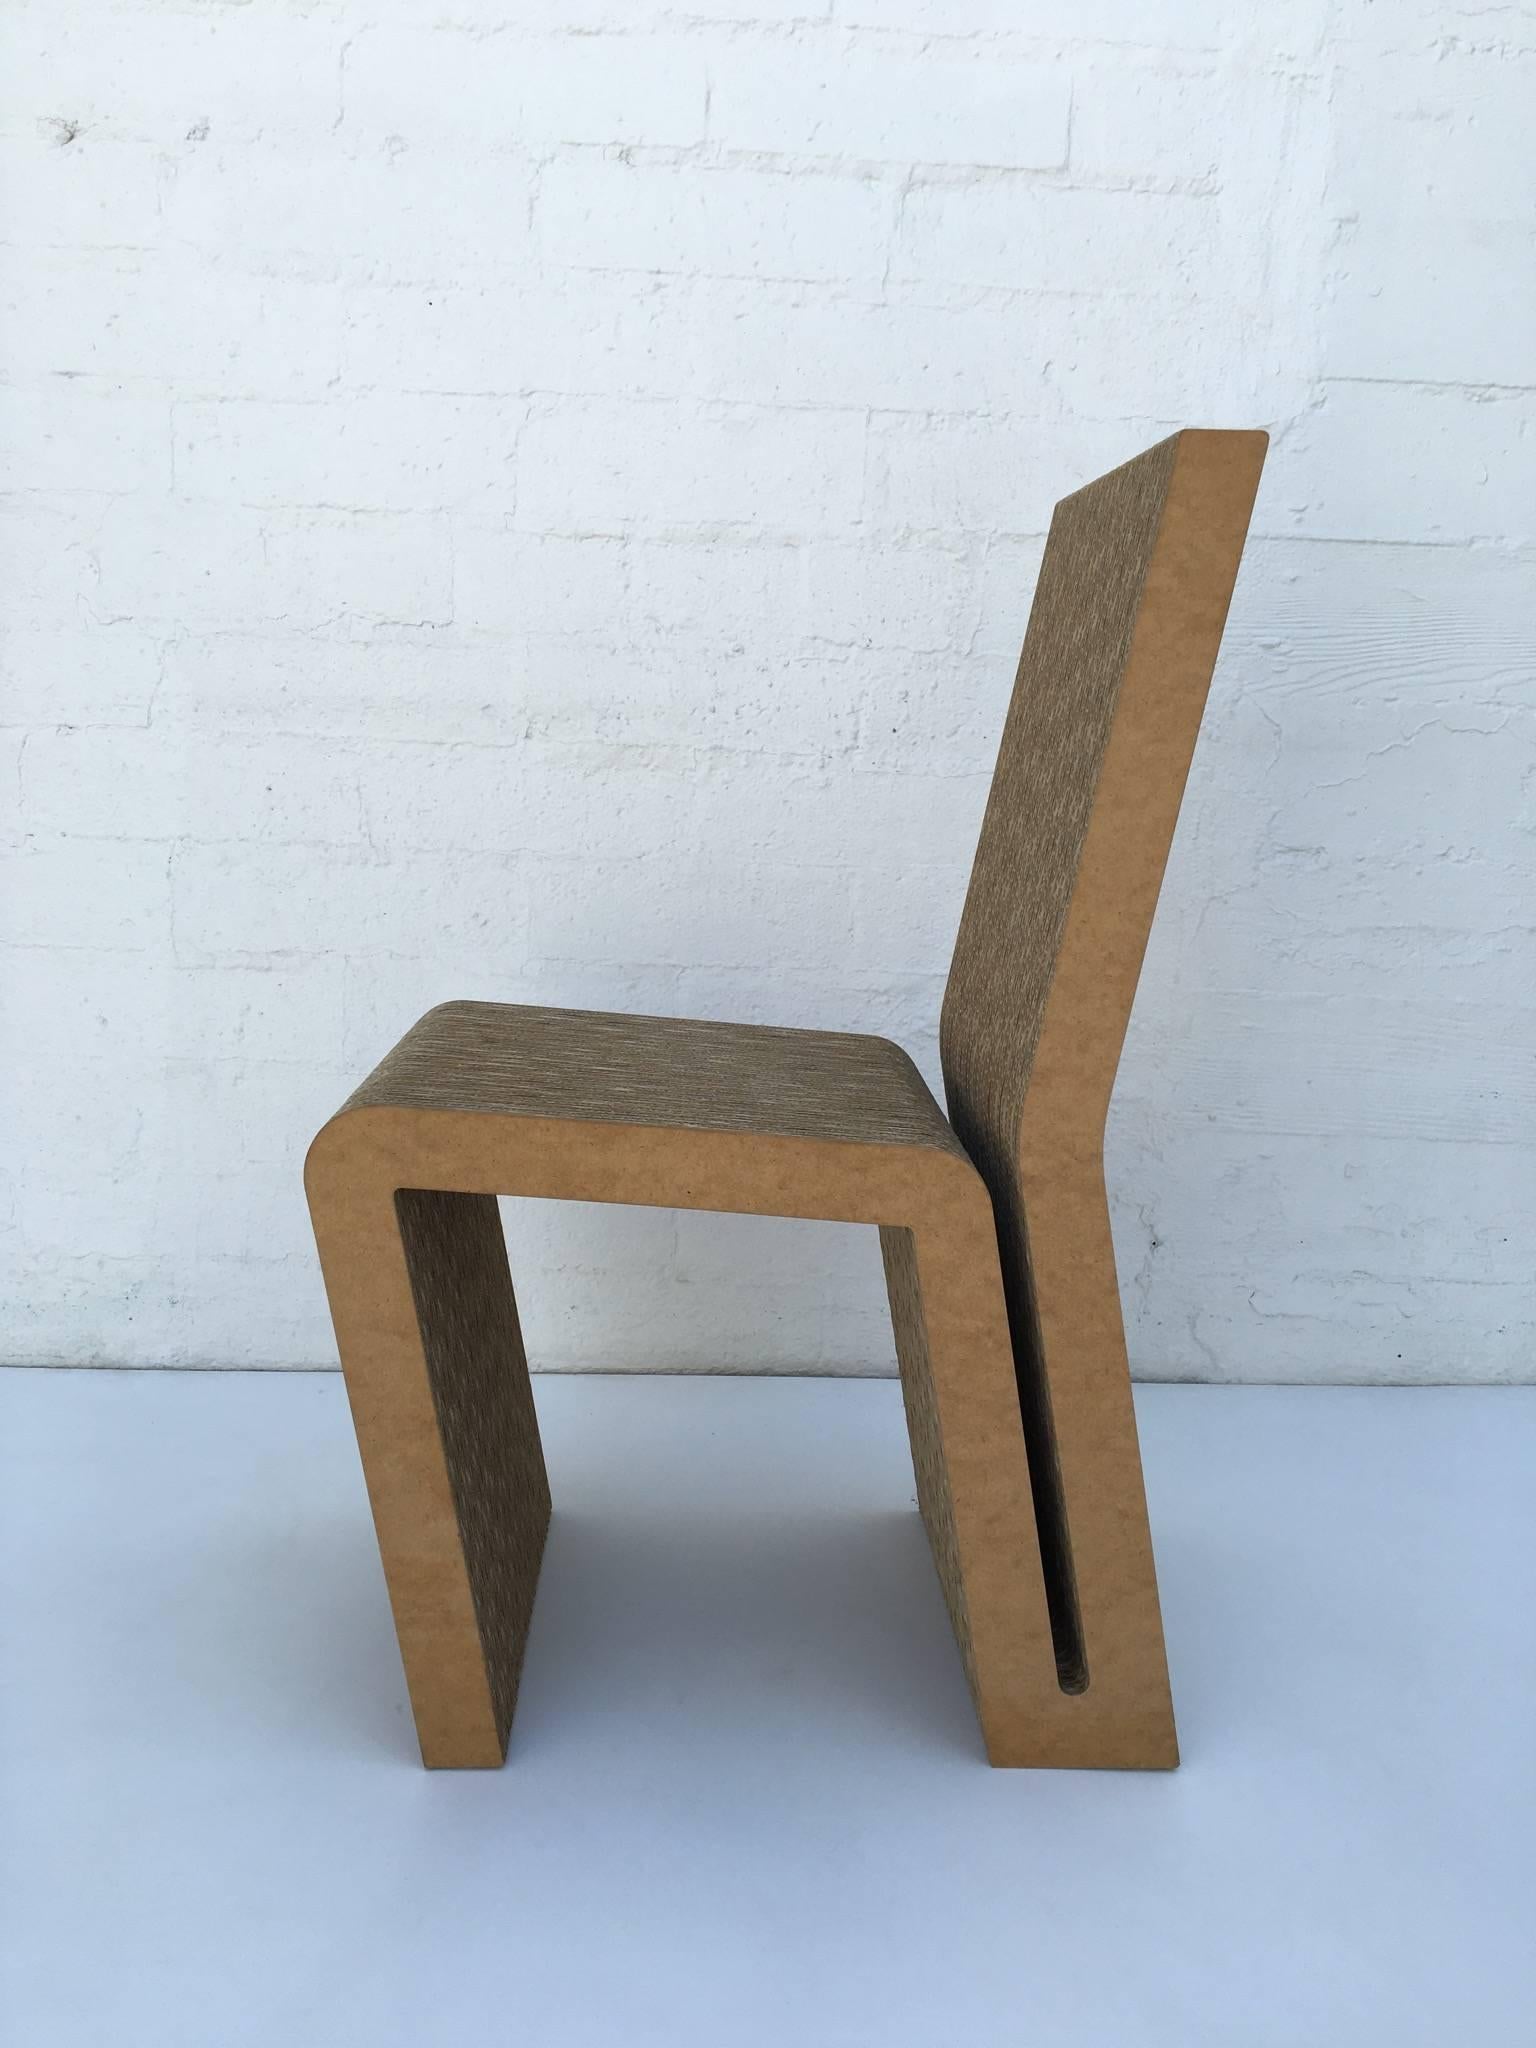 cardboard chair dimensions